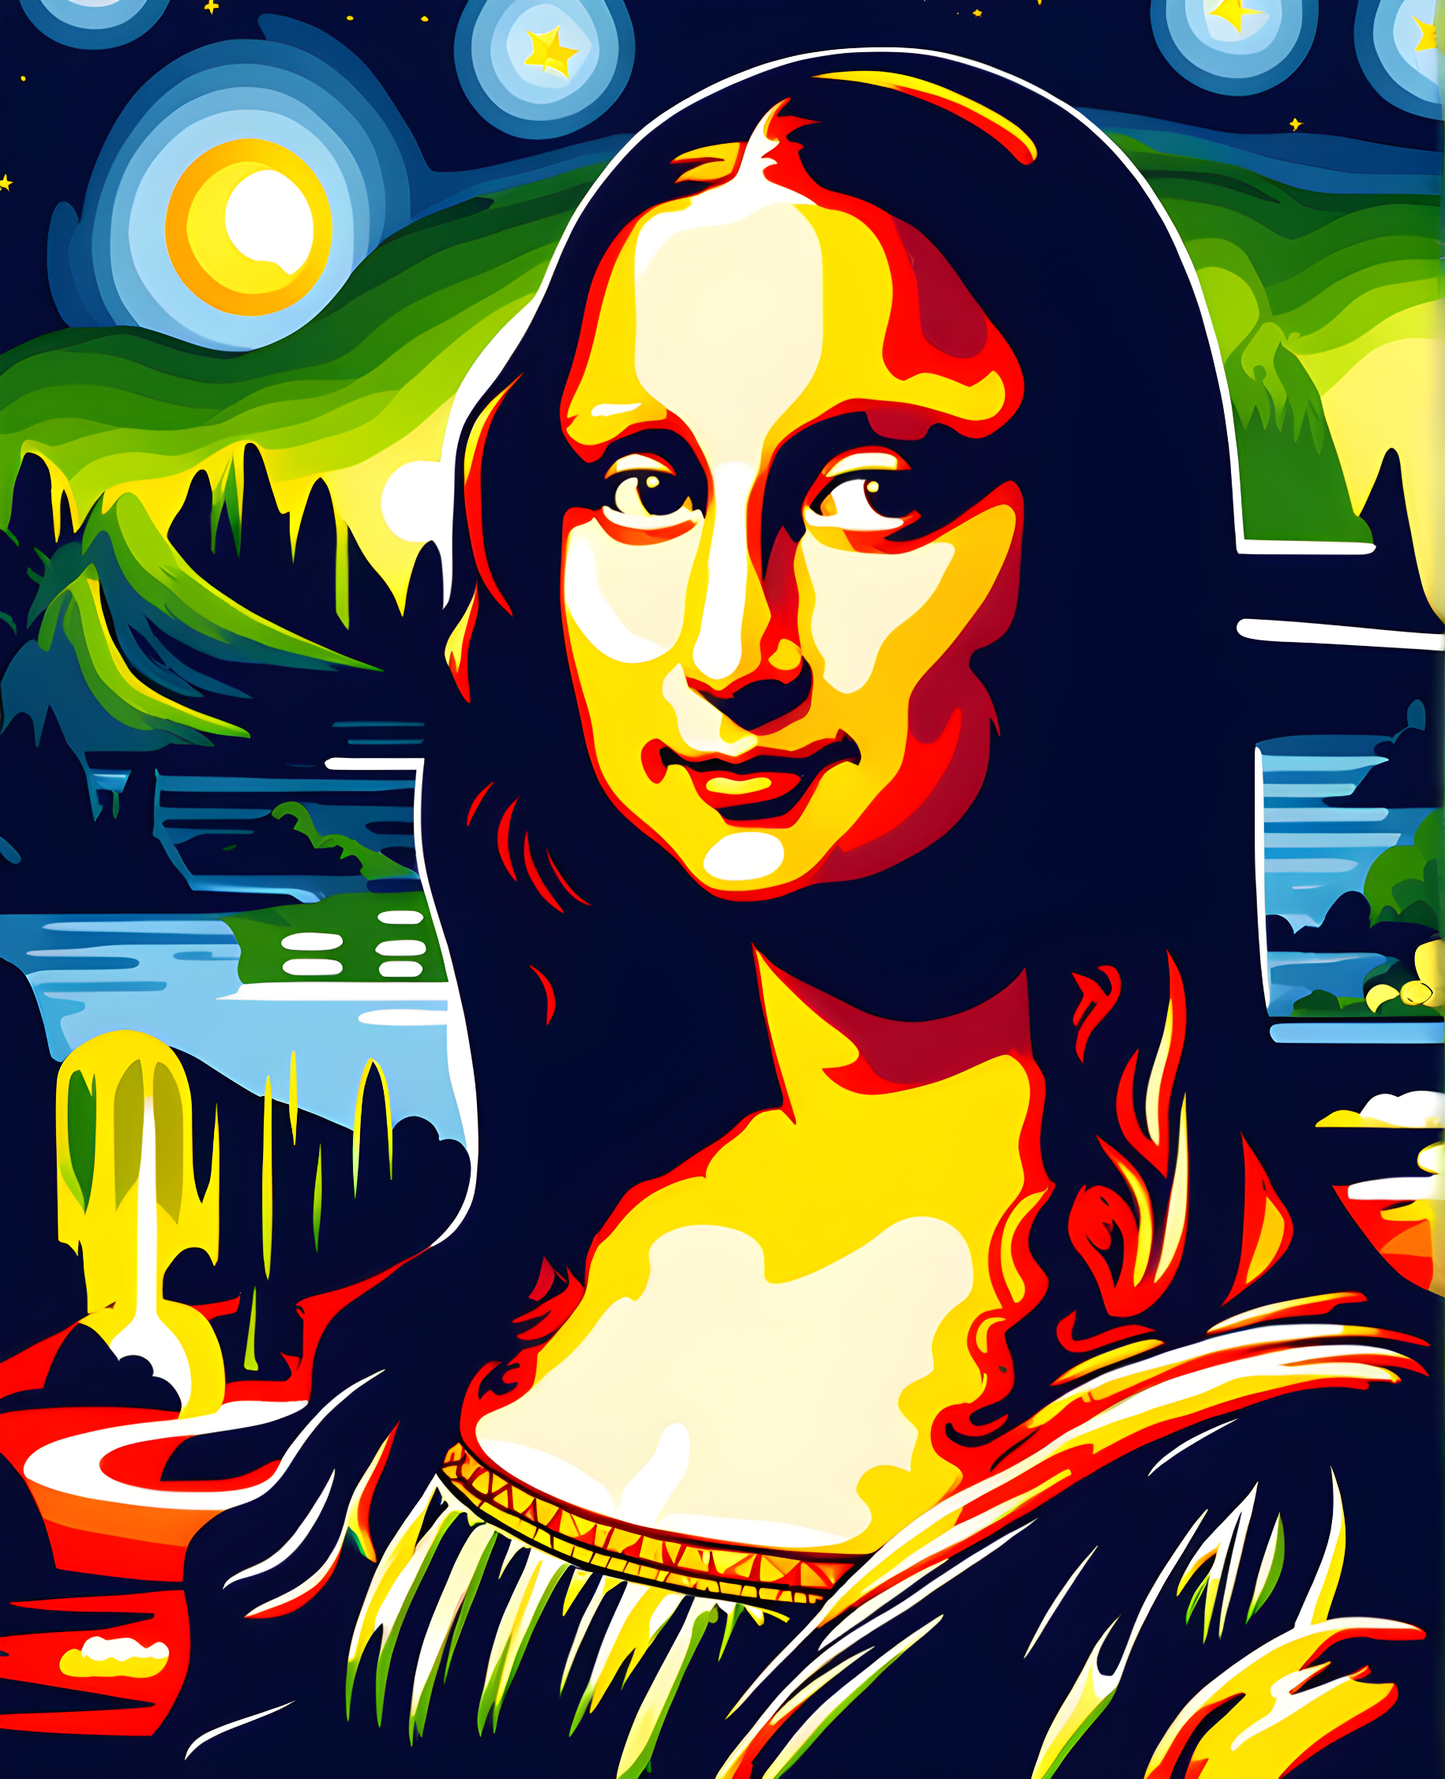 Mona Lisa by Leonardo da Vinci Collection PD (11) - Van-Go Paint-By-Number Kit